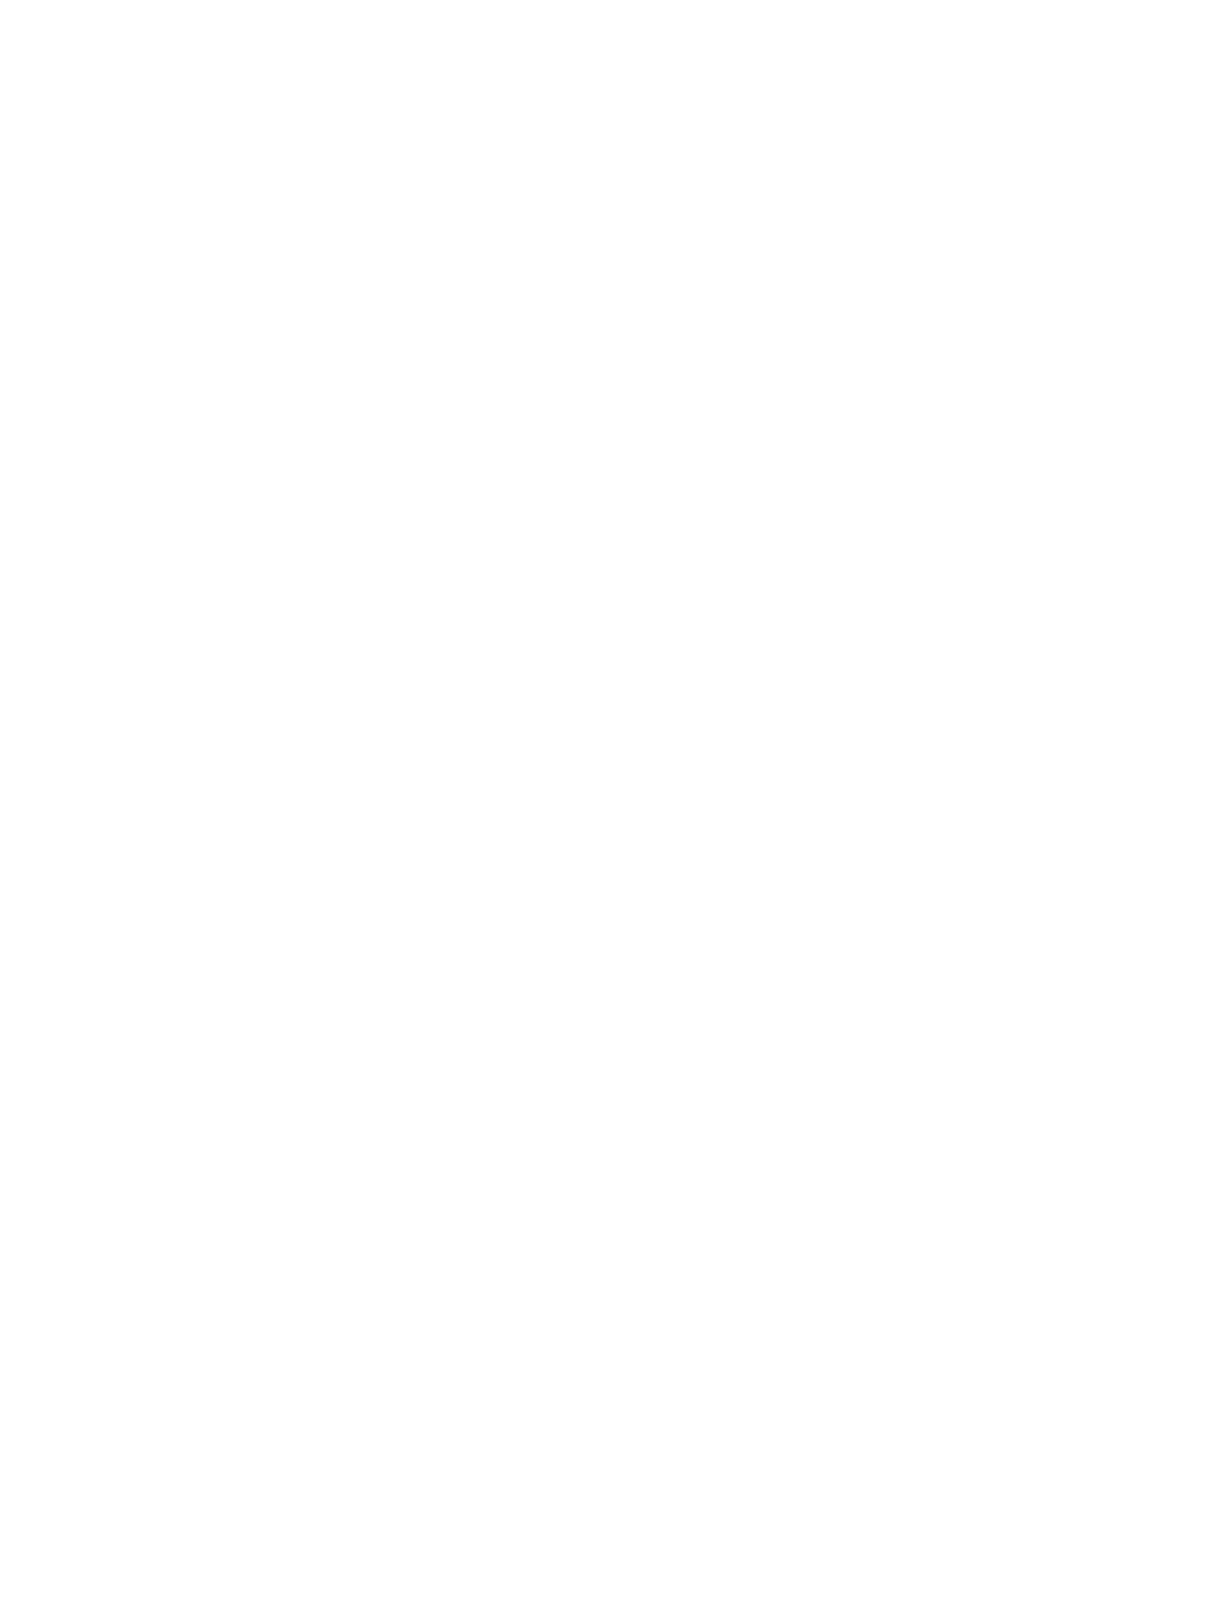 Ahold Delhaize logo for dark backgrounds (transparent PNG)